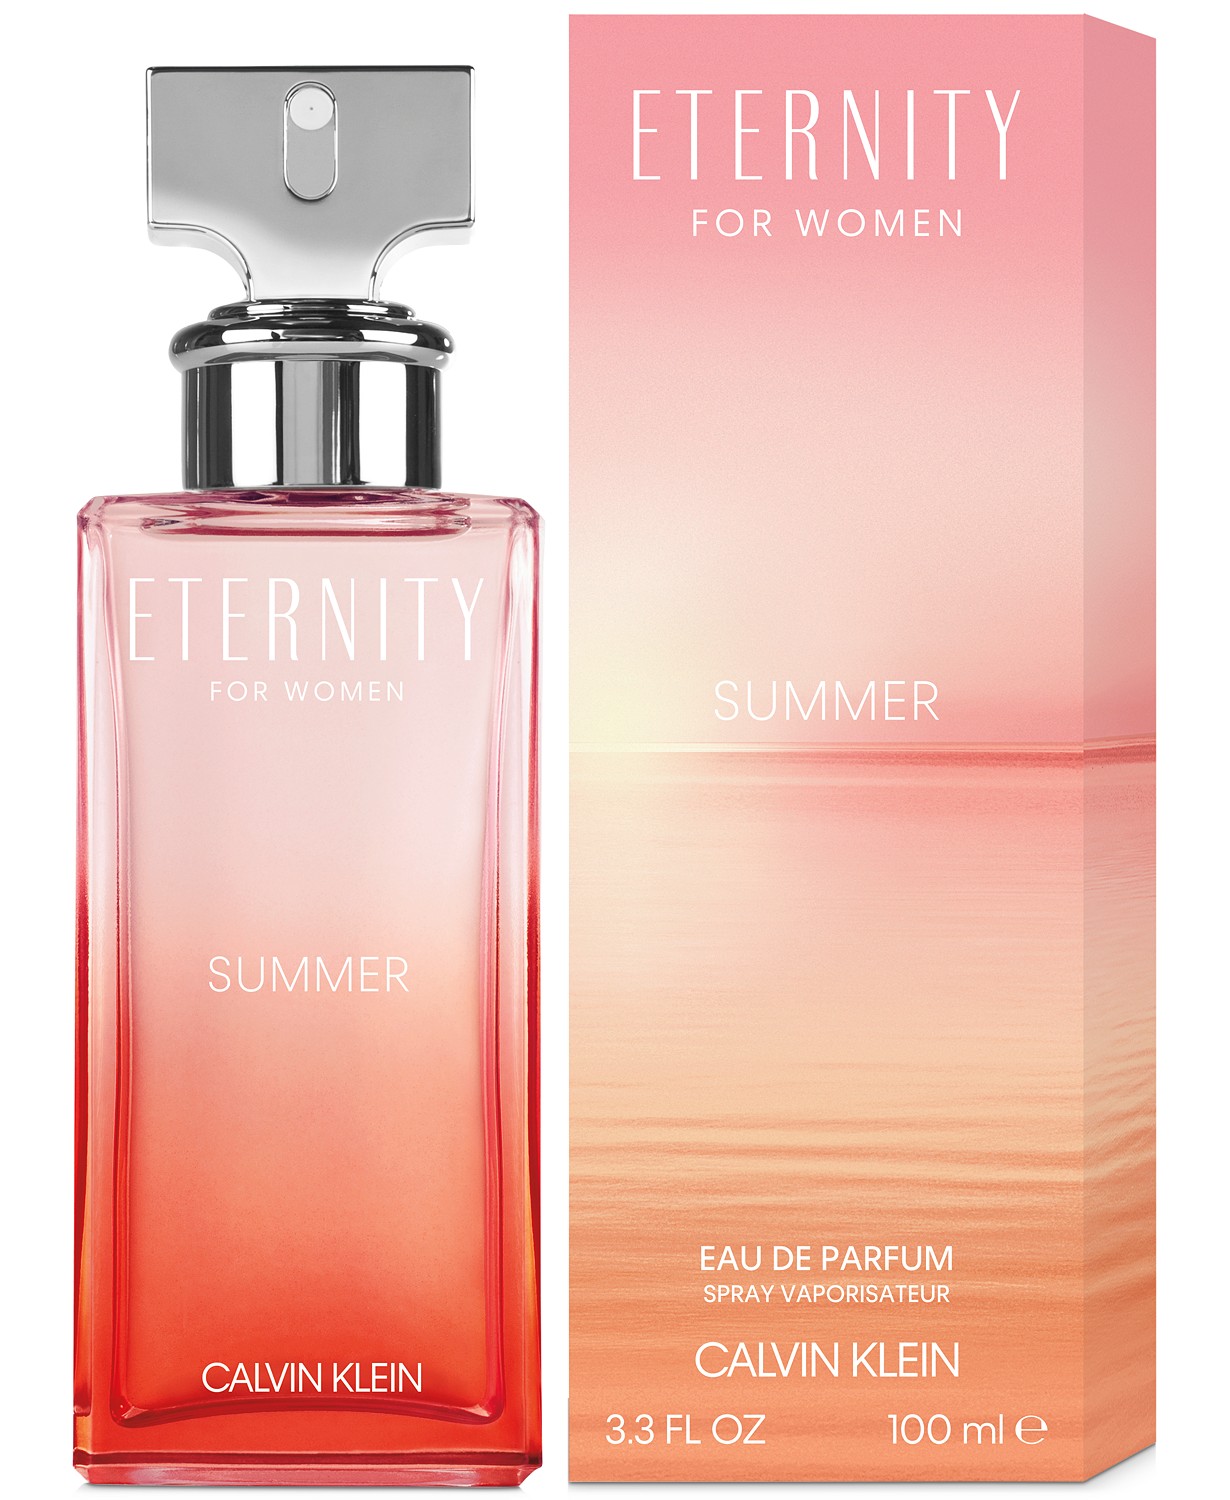 calvin klein eternity summer women's perfume